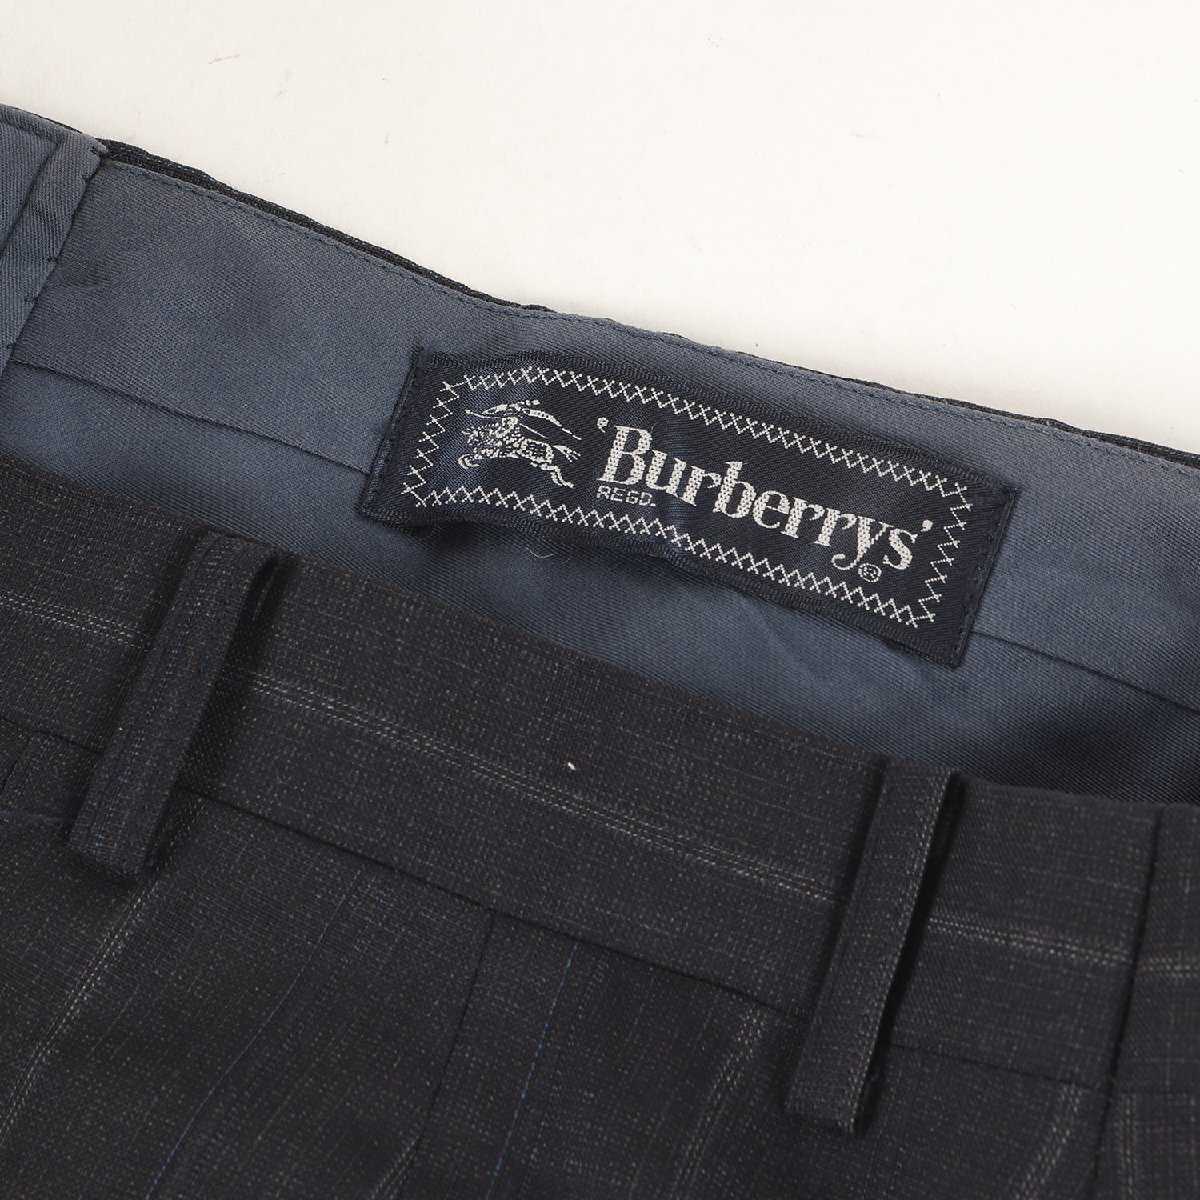 BURBERRY  Burberry    размер  :92-80-170 A5 90s 6B ...  пиджак  ...  брюки   /  установка    костюм  Burberrys  военно-морской флот 